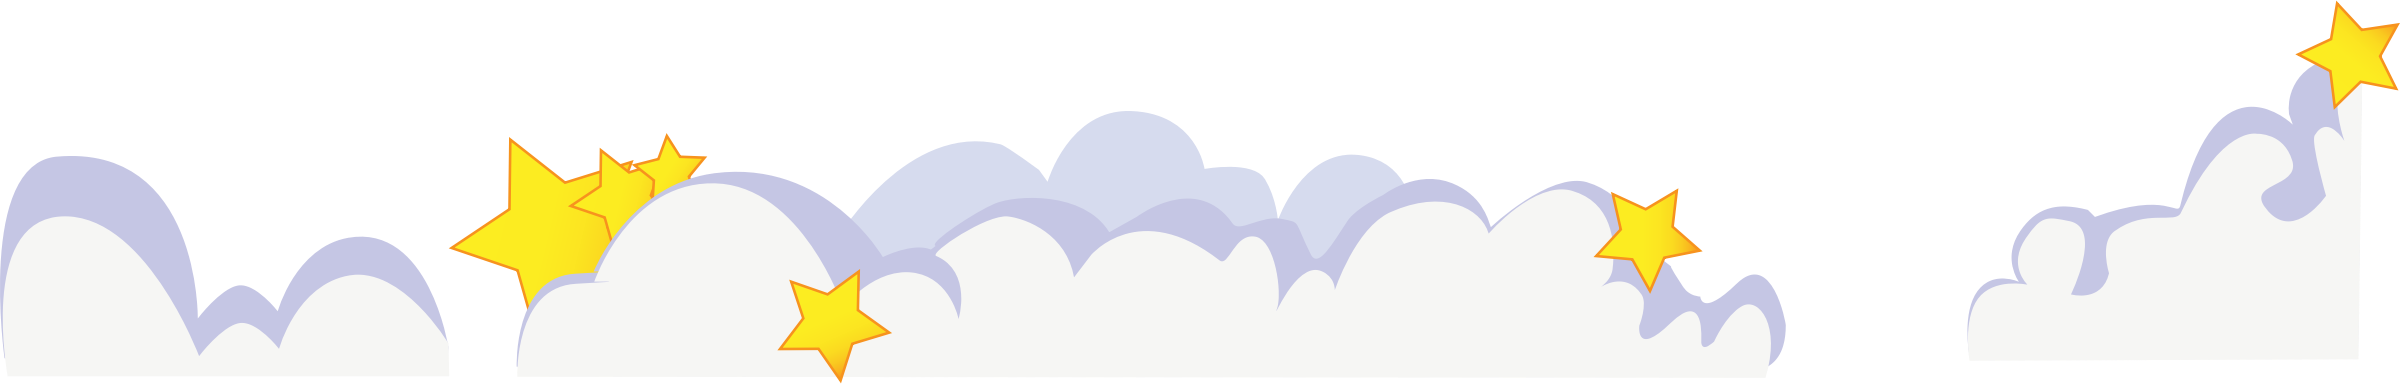 clipart borders cloud